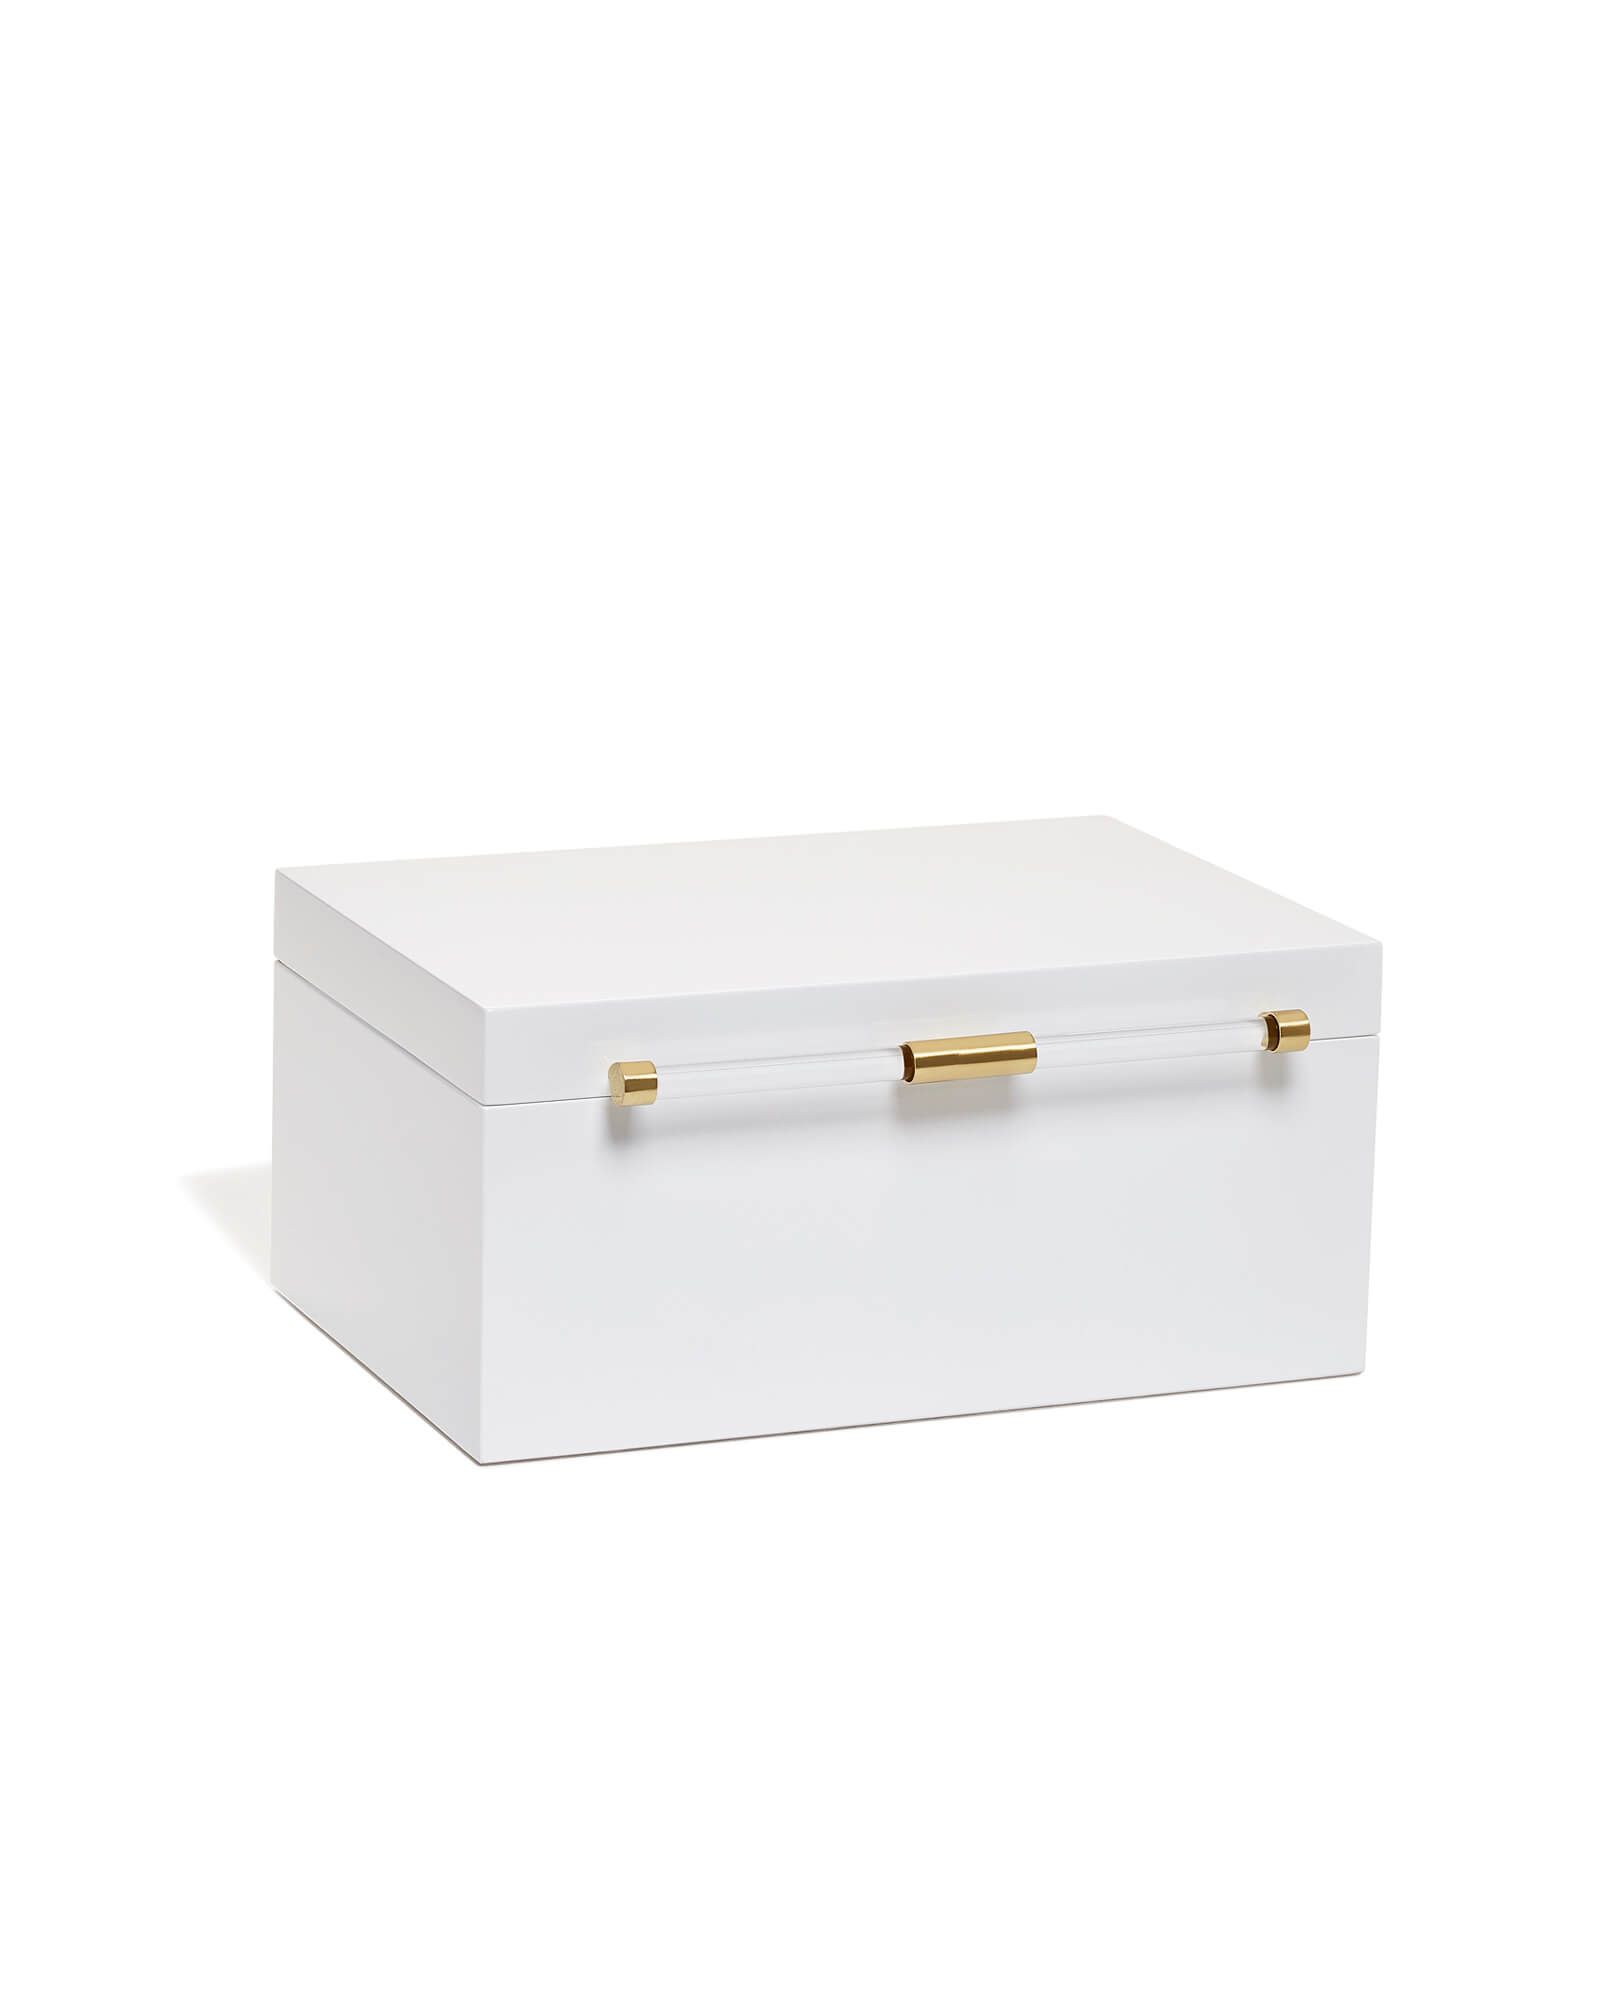 Medium Antique Brass Jewelry Box in White Lacquer | Kendra Scott | Kendra Scott